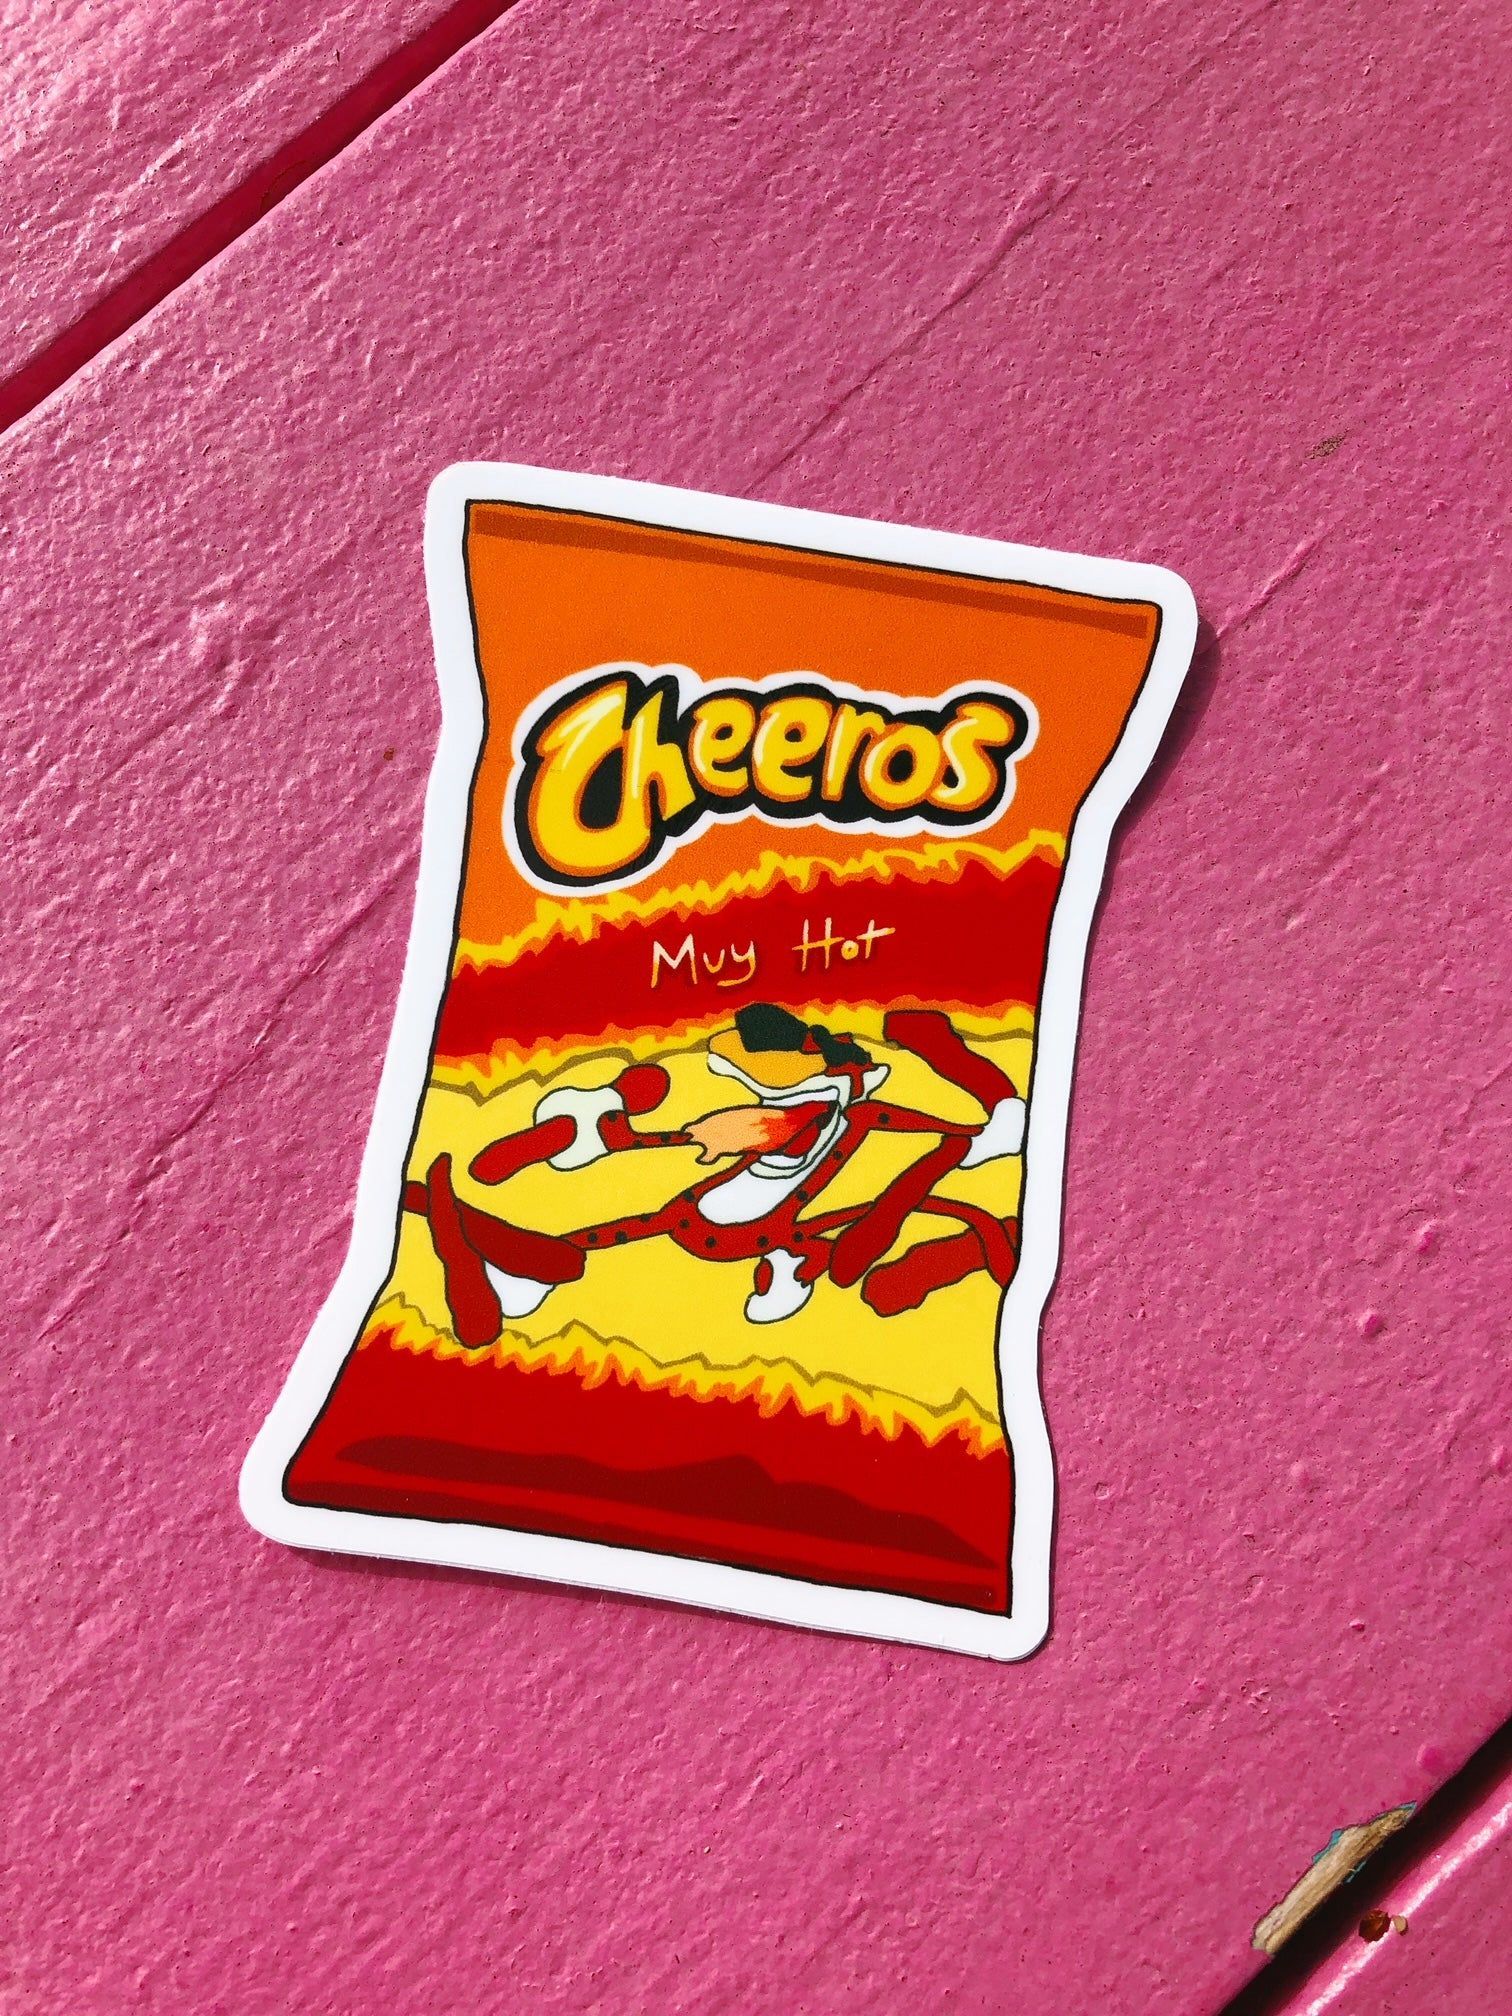 A sticker of a bag of Cheetos on a pink background - Cheetos